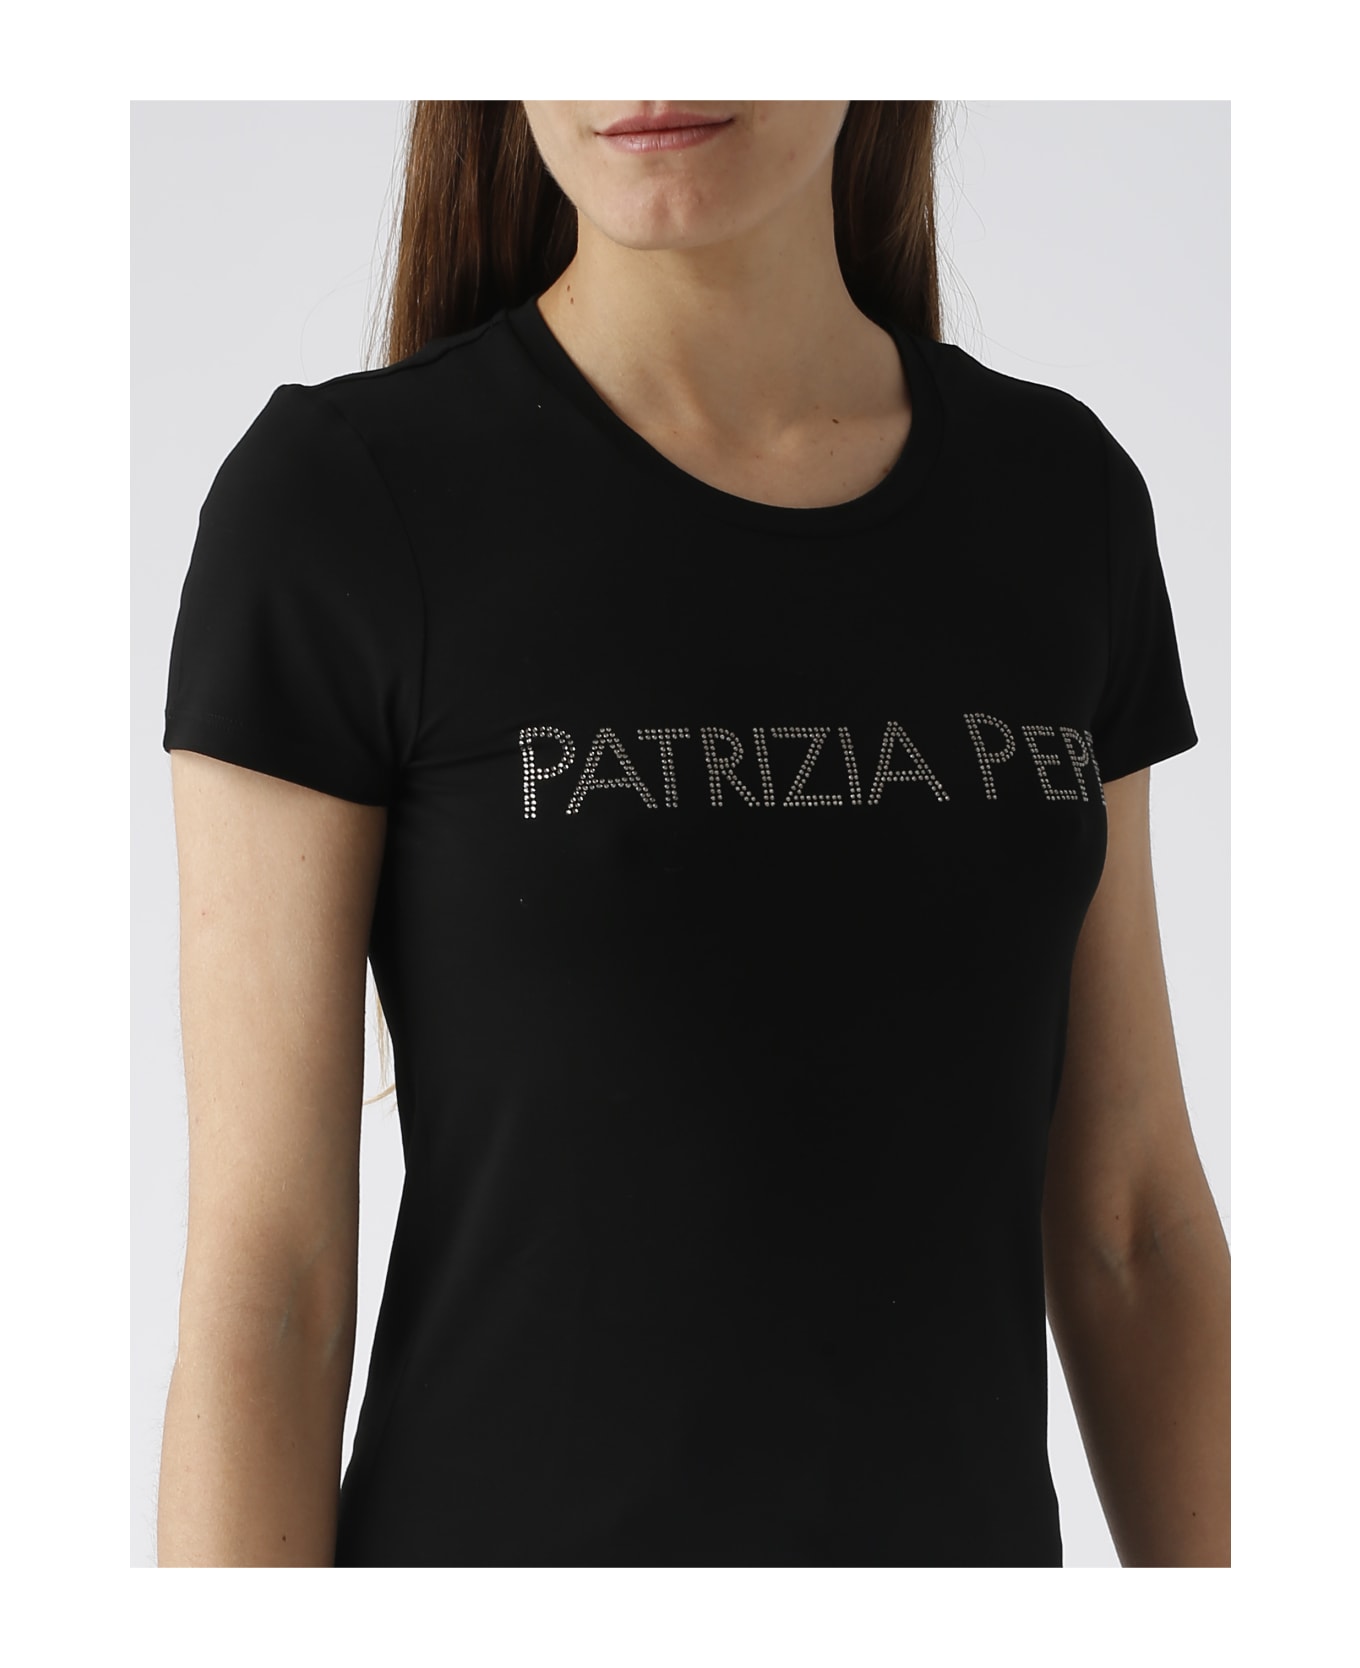 Patrizia Pepe T-shirt T-shirt - NERO